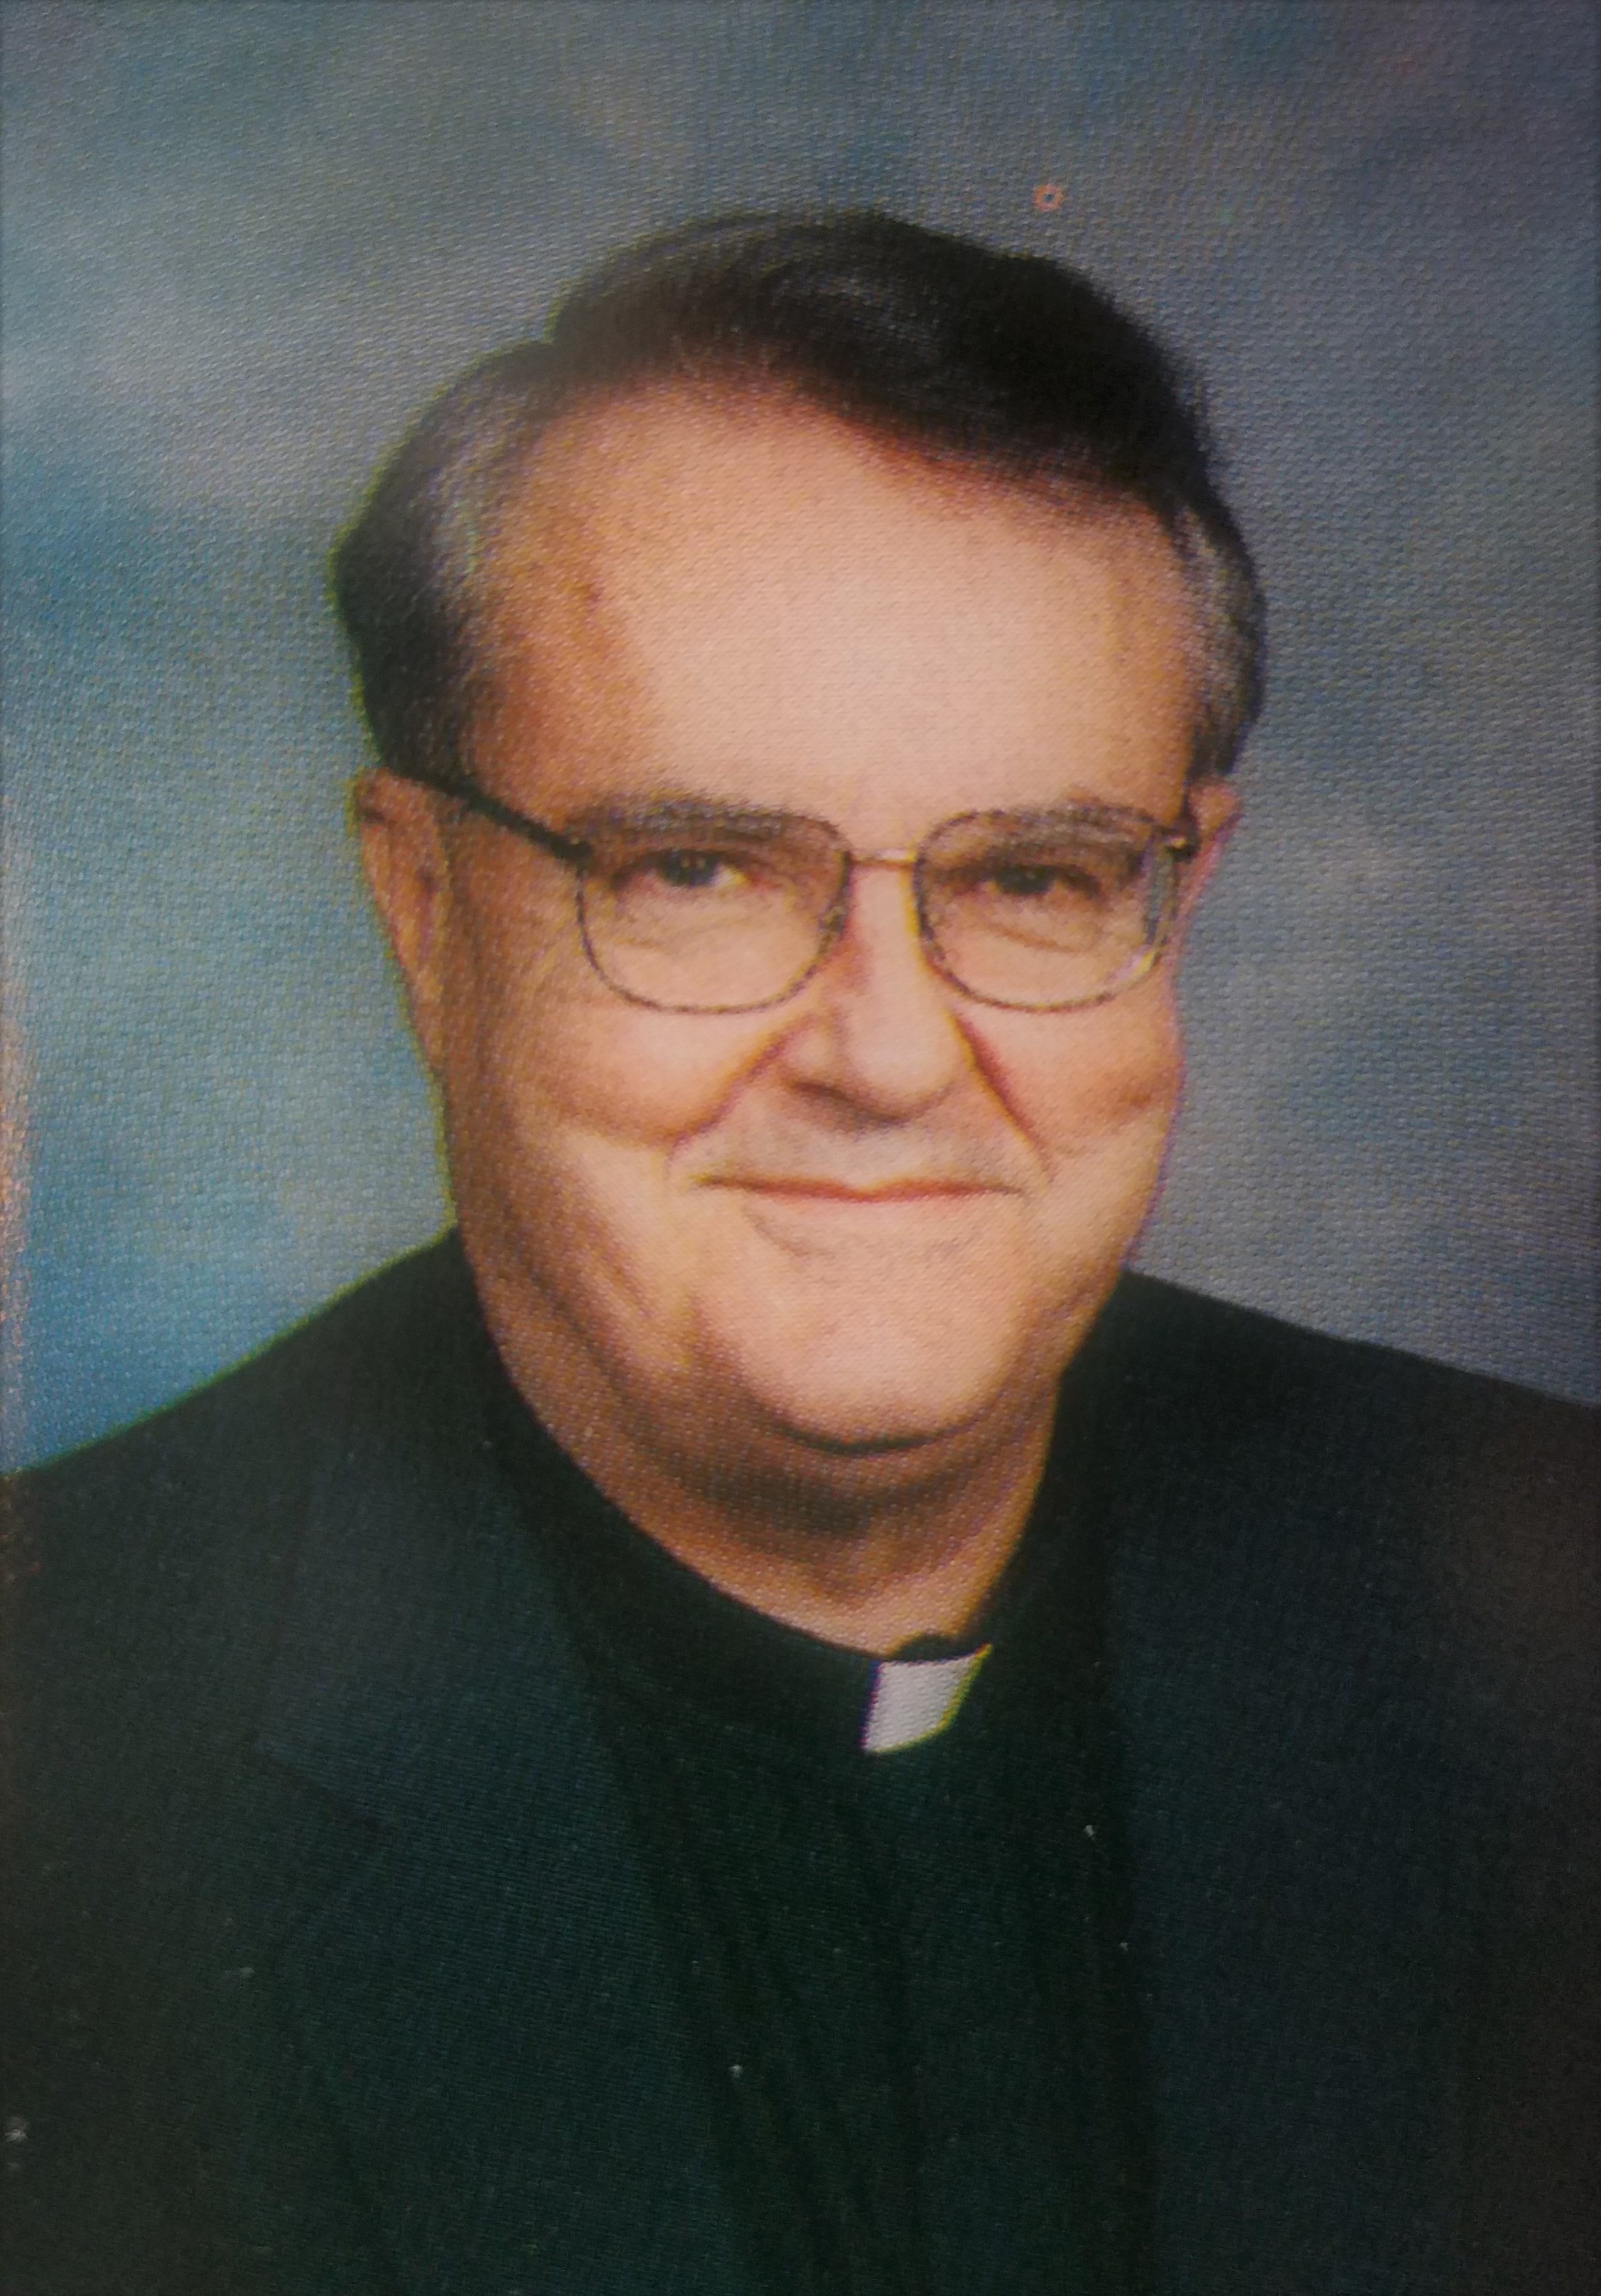 Father Patrick Clark